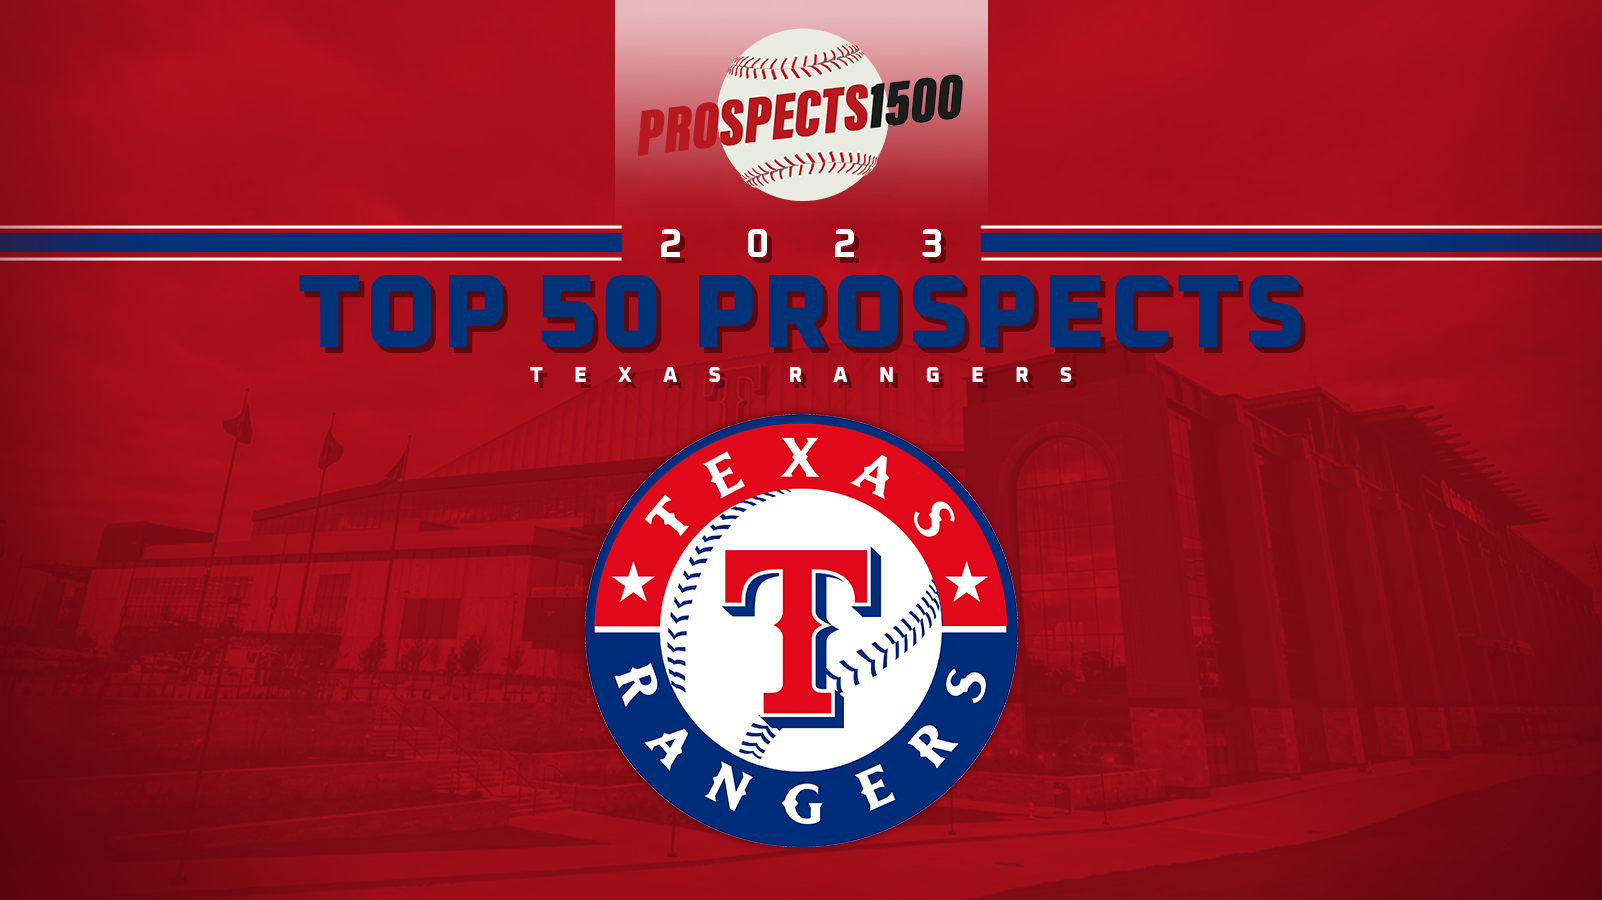 www.prospects1500.com